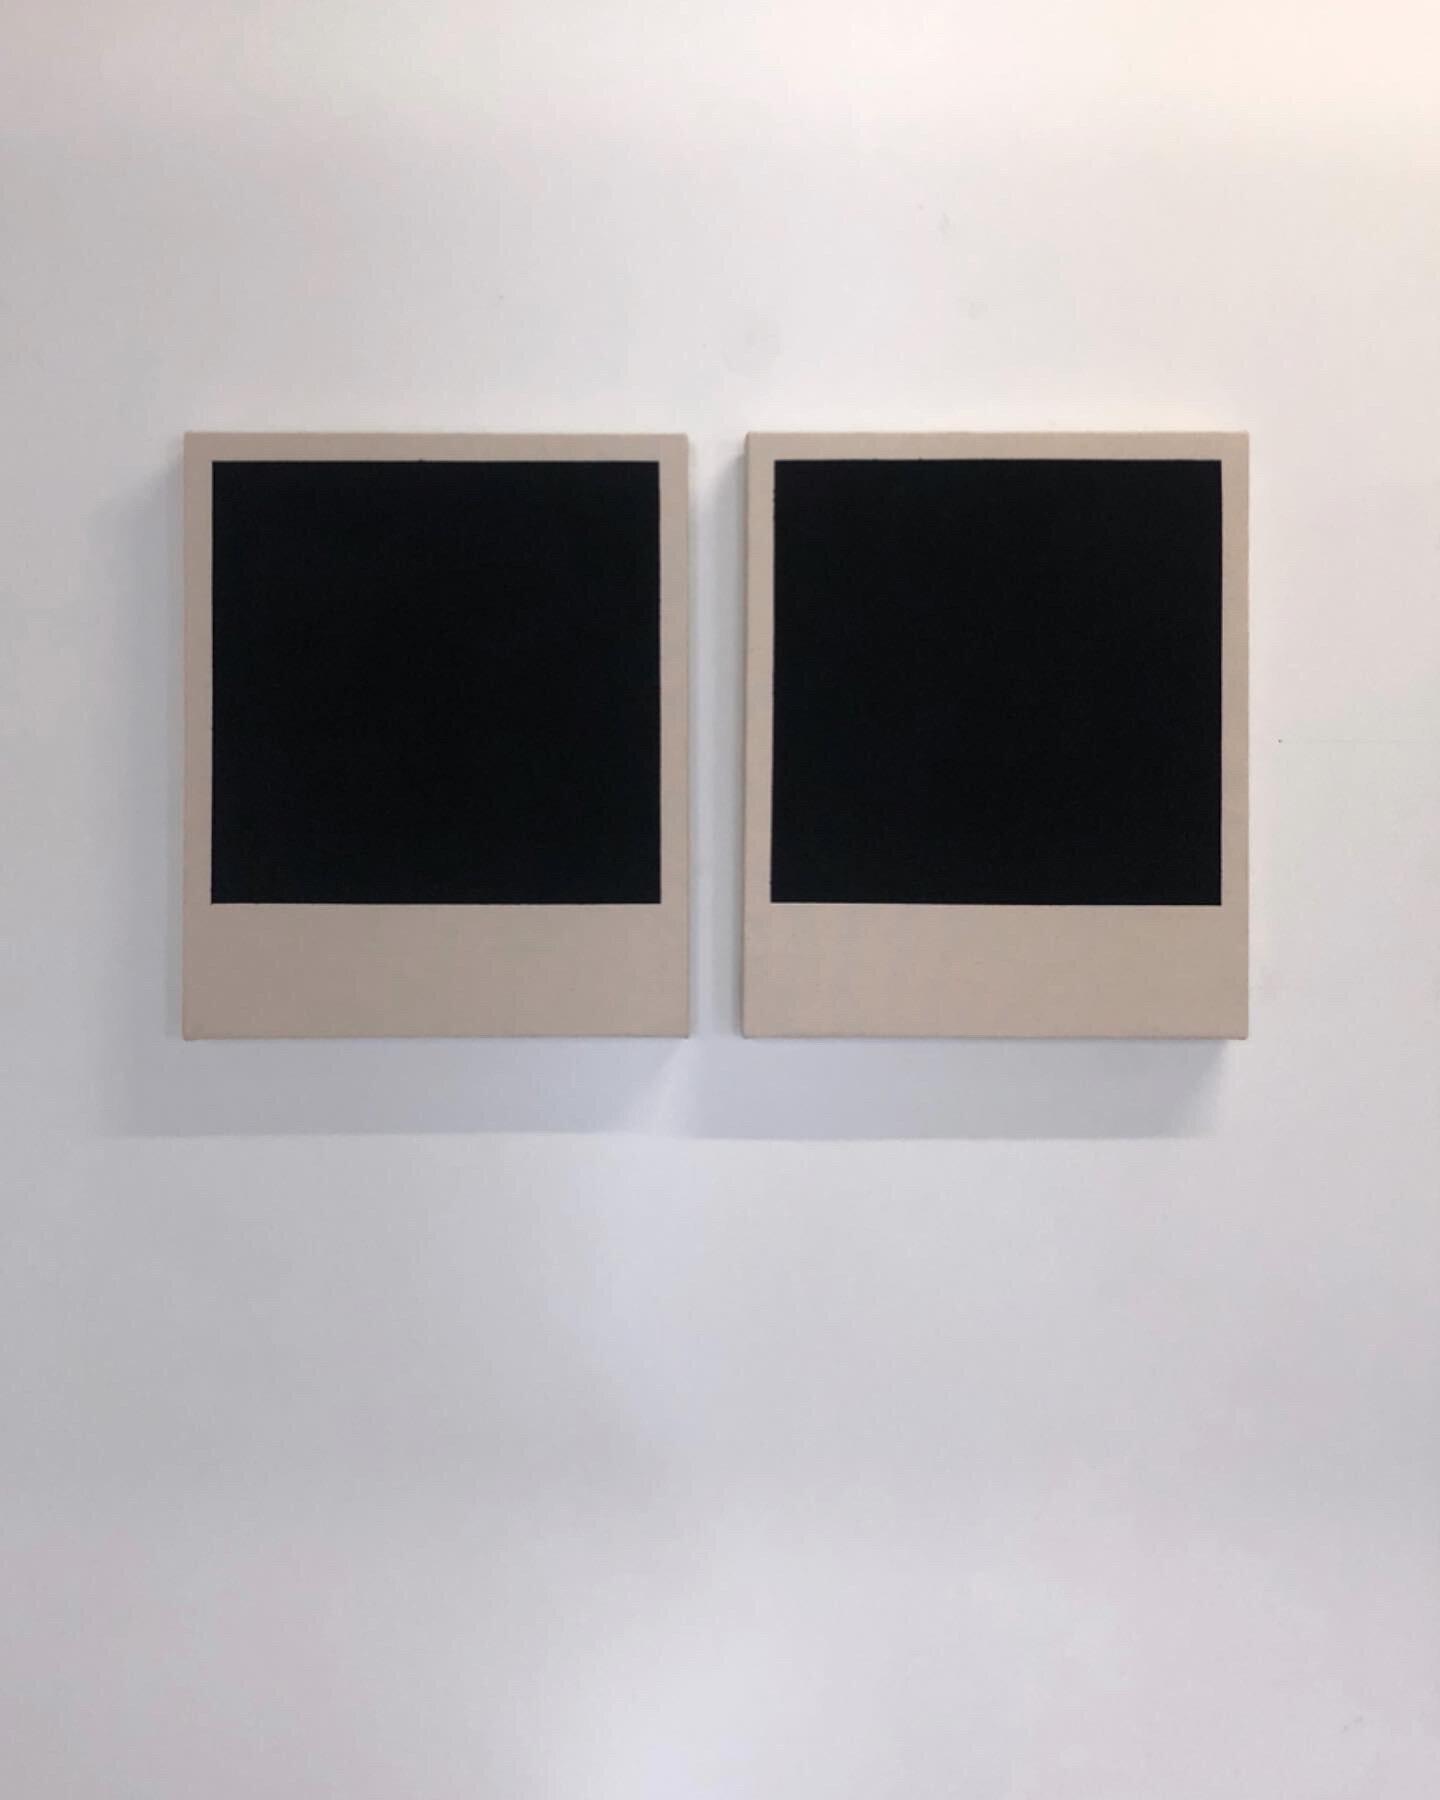   Black Square (Polaroid) , 2020 Acrylic on canvas 13.5 x 16 inches (34cm x 41cm) each 